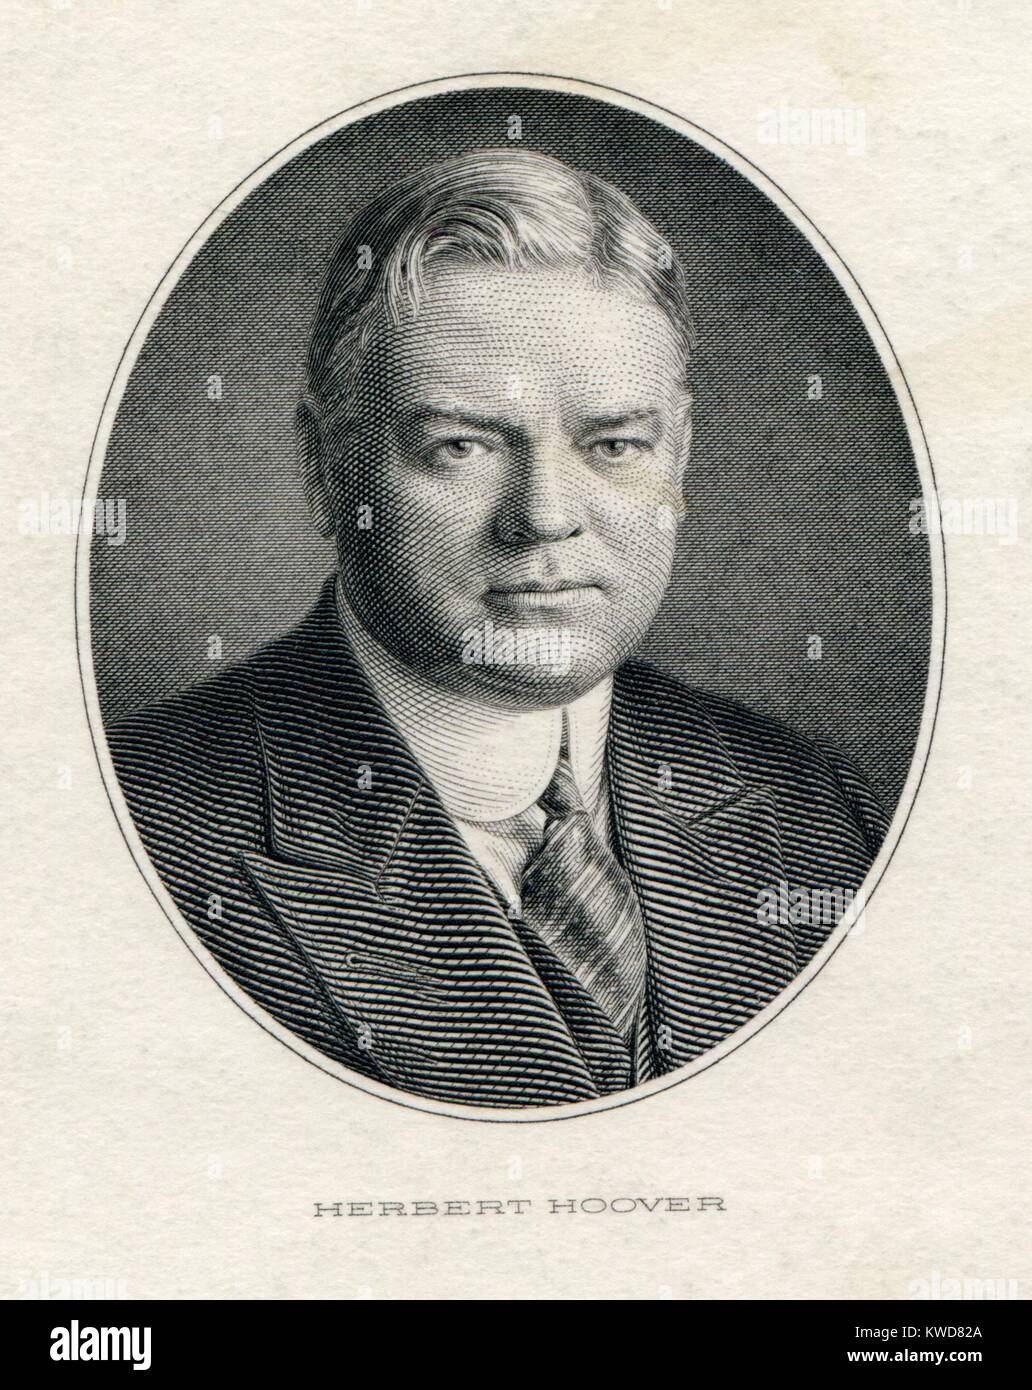 Präsident Herbert Hoover in seiner offiziellen Porträt Gravur, Ca. 1929. (BSLOC 2015 16 46) Stockfoto